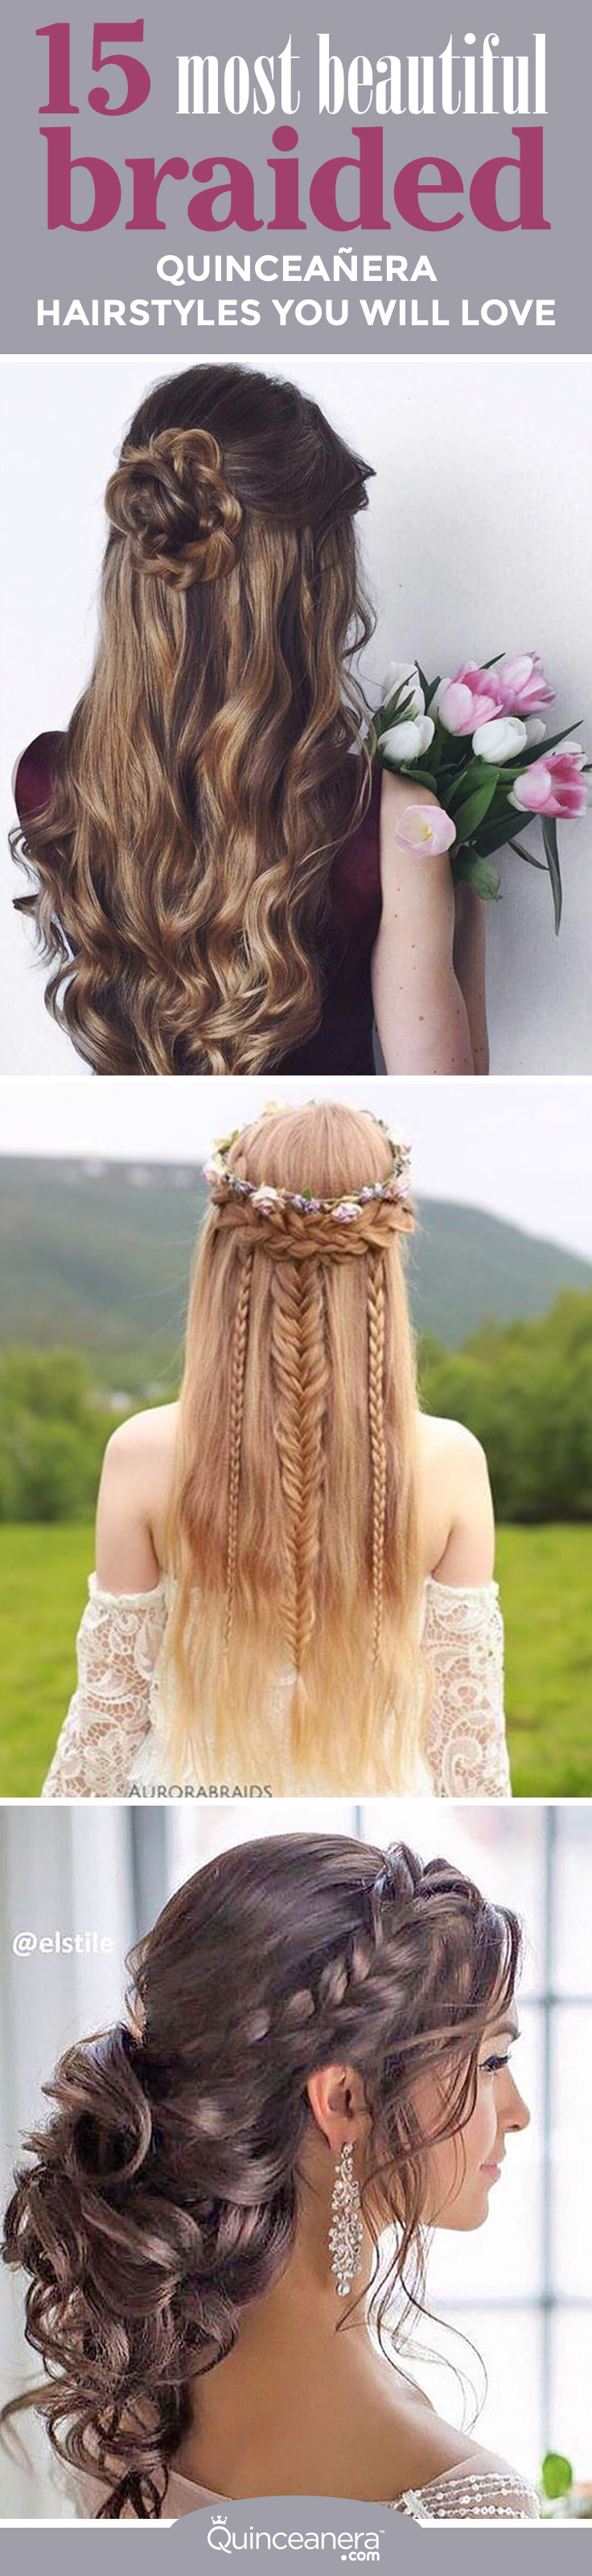 braided-styles